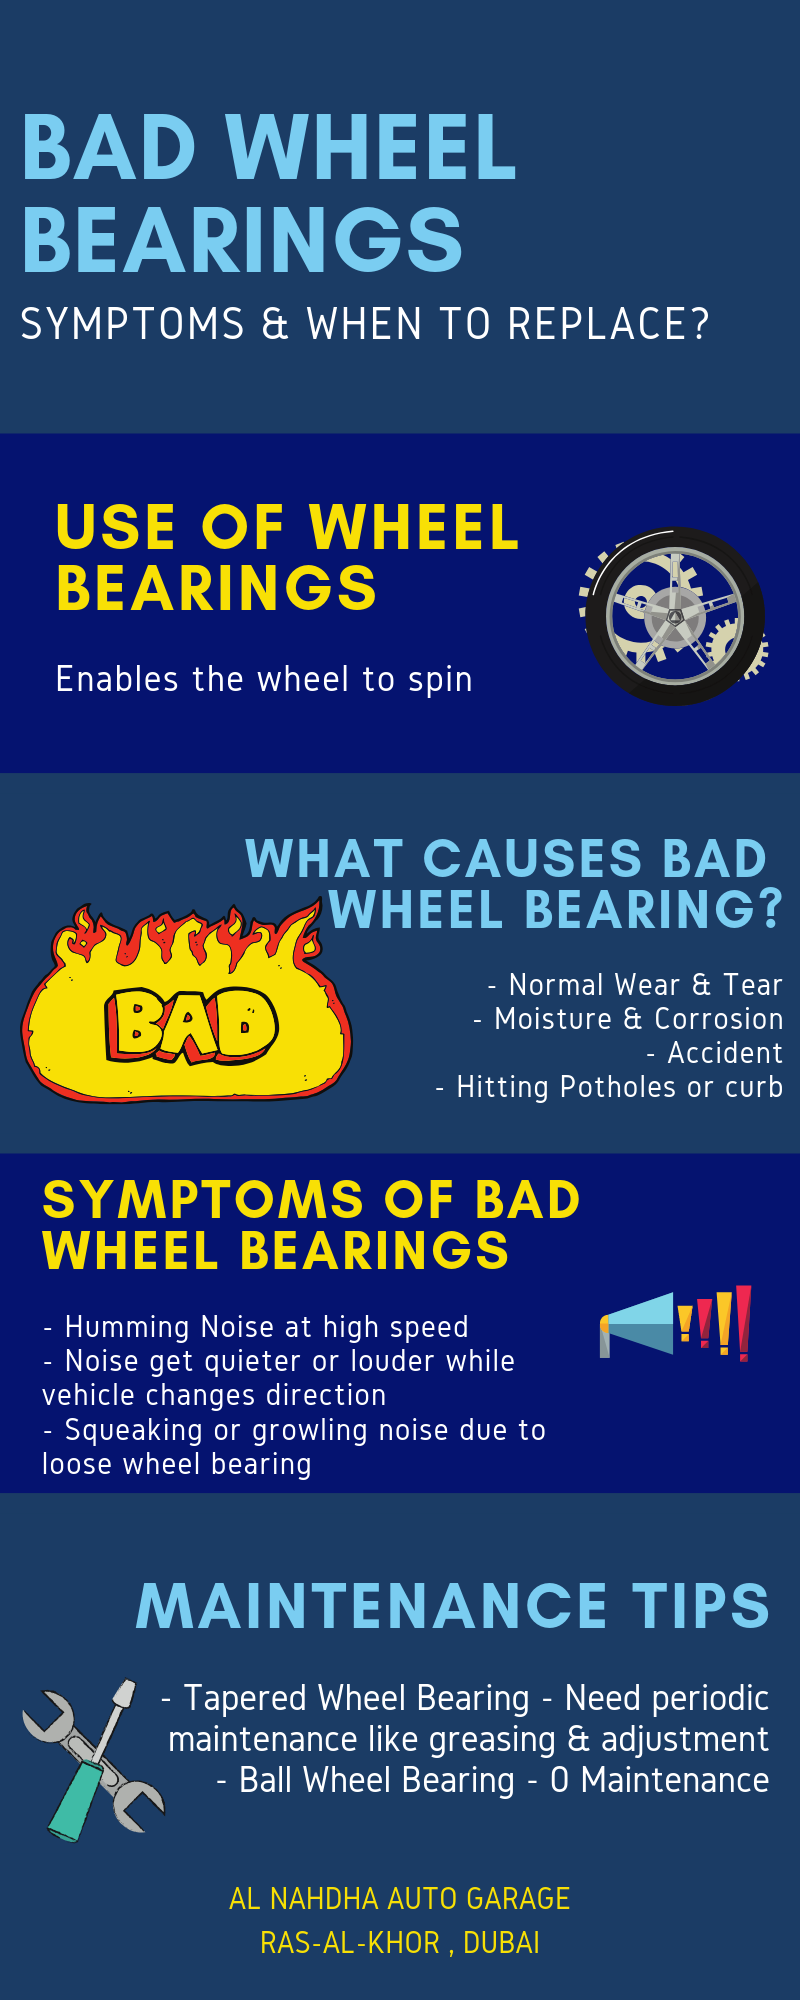 Bad Wheel Bearings - Symptoms, Causes & Maintenance Tips